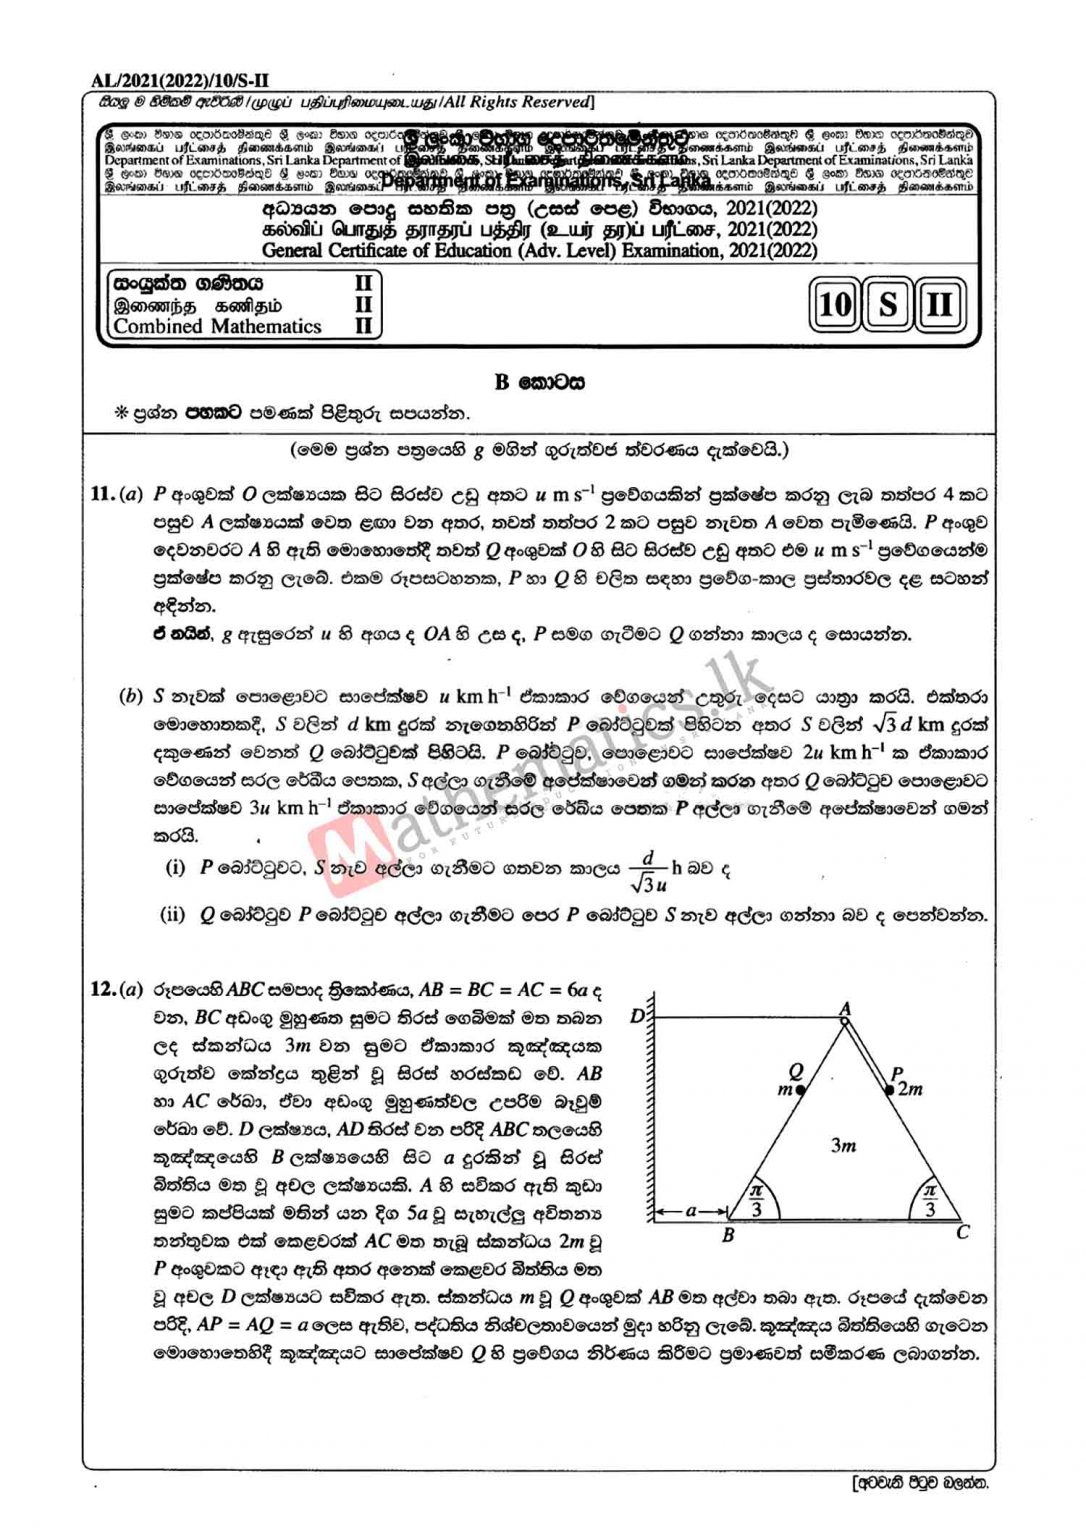 2017 a l combined maths paper pdf download